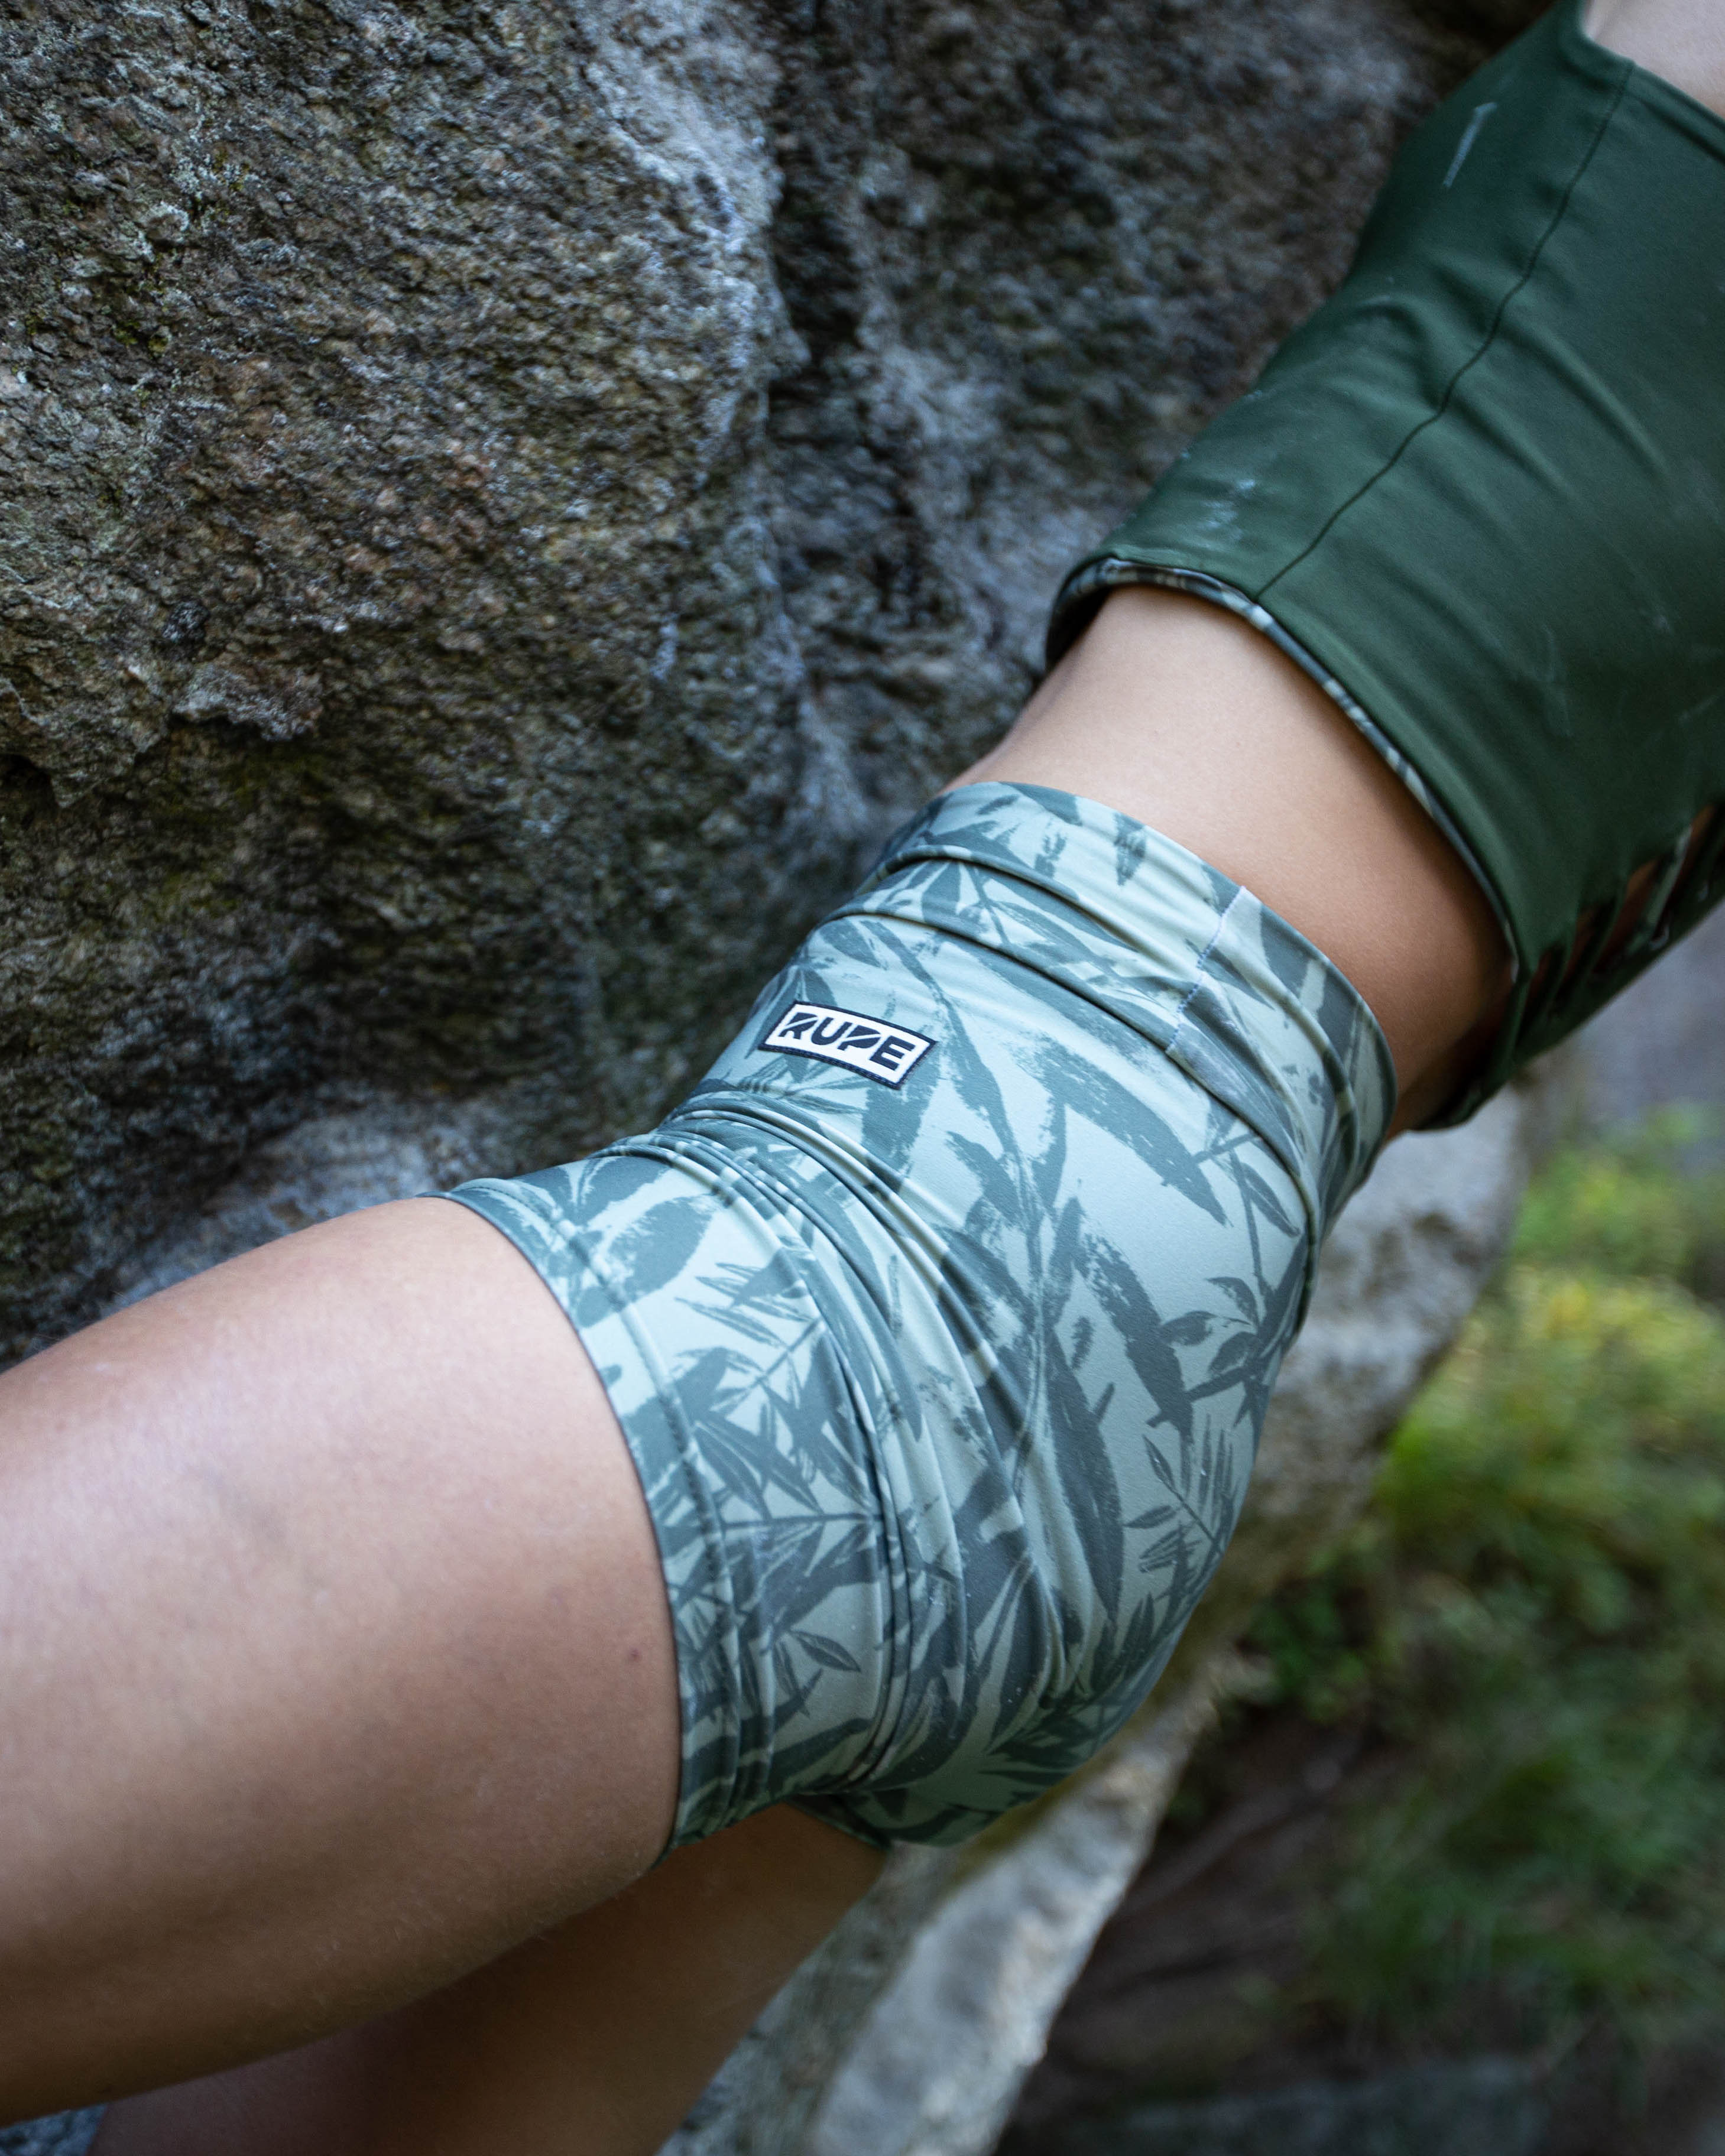 Women's technical leggings – teal mountain pattern